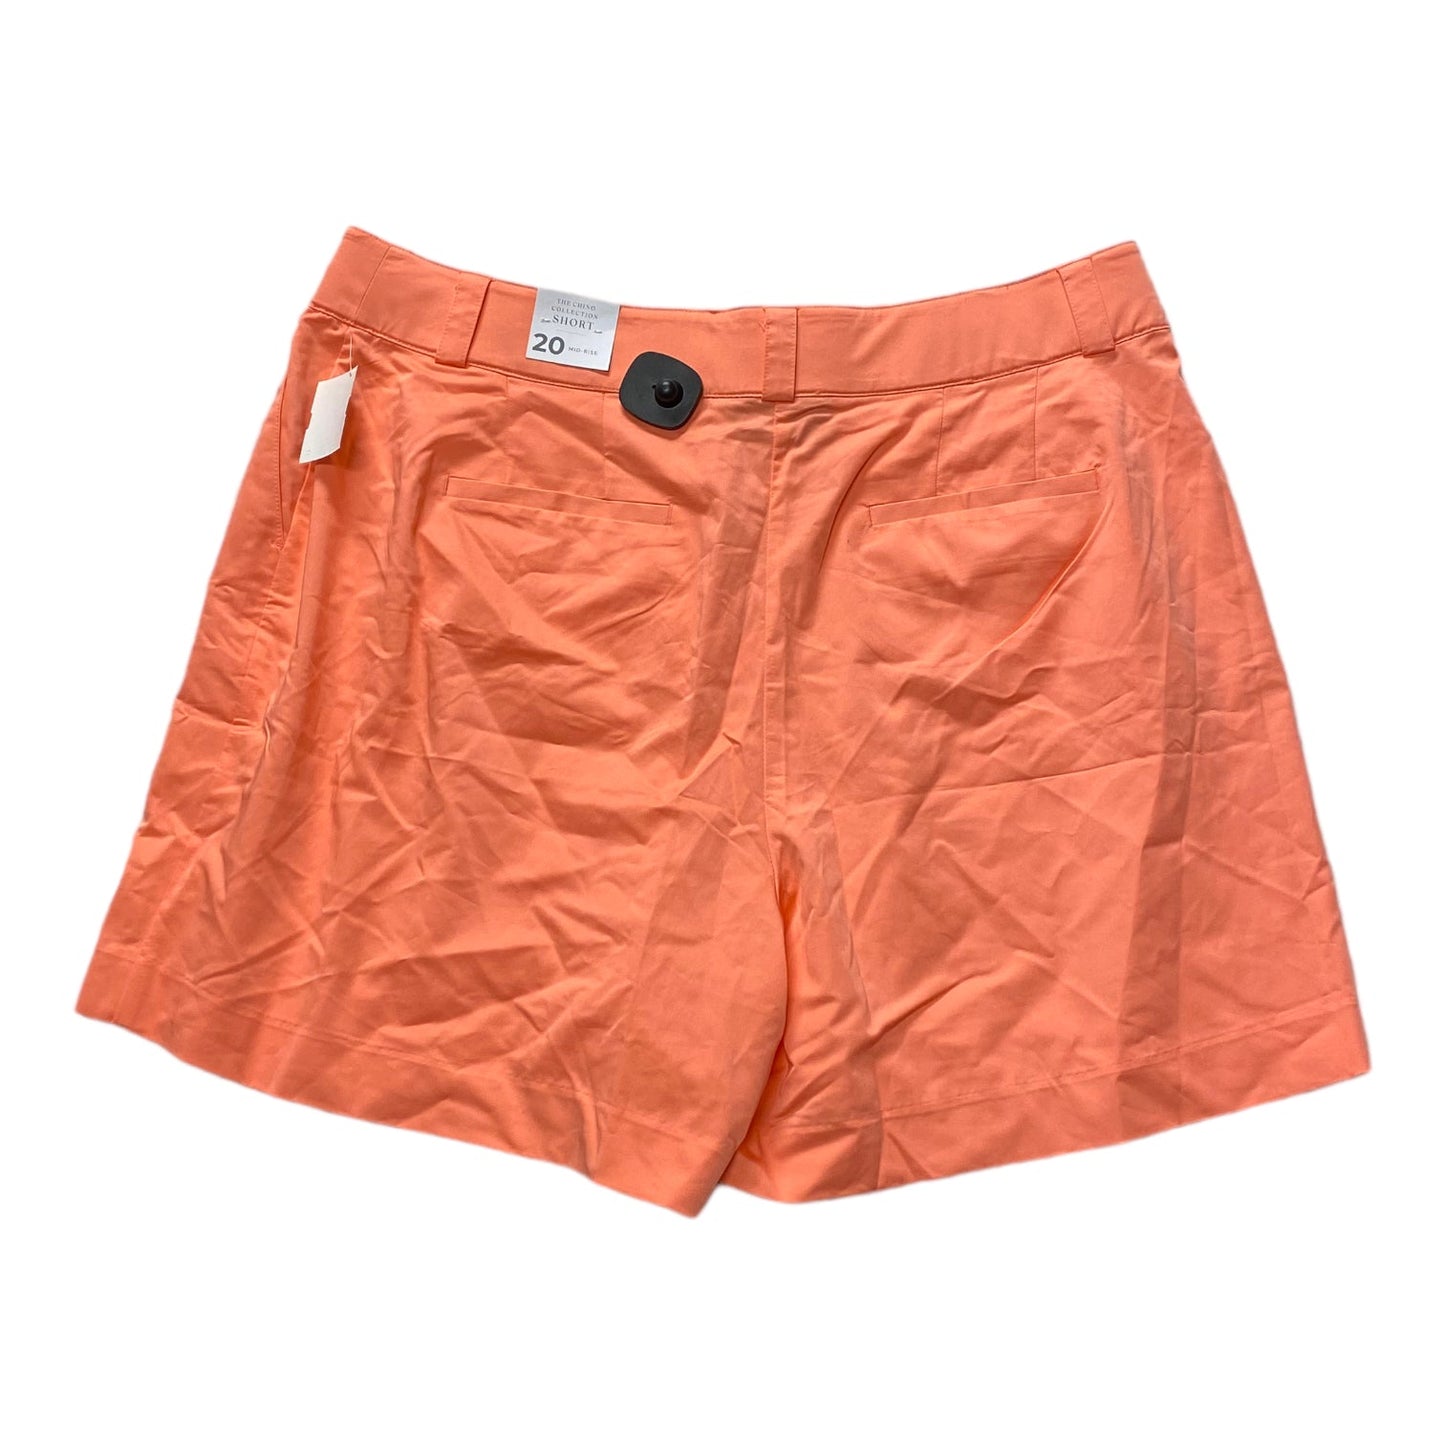 Pink Shorts Lane Bryant, Size 20